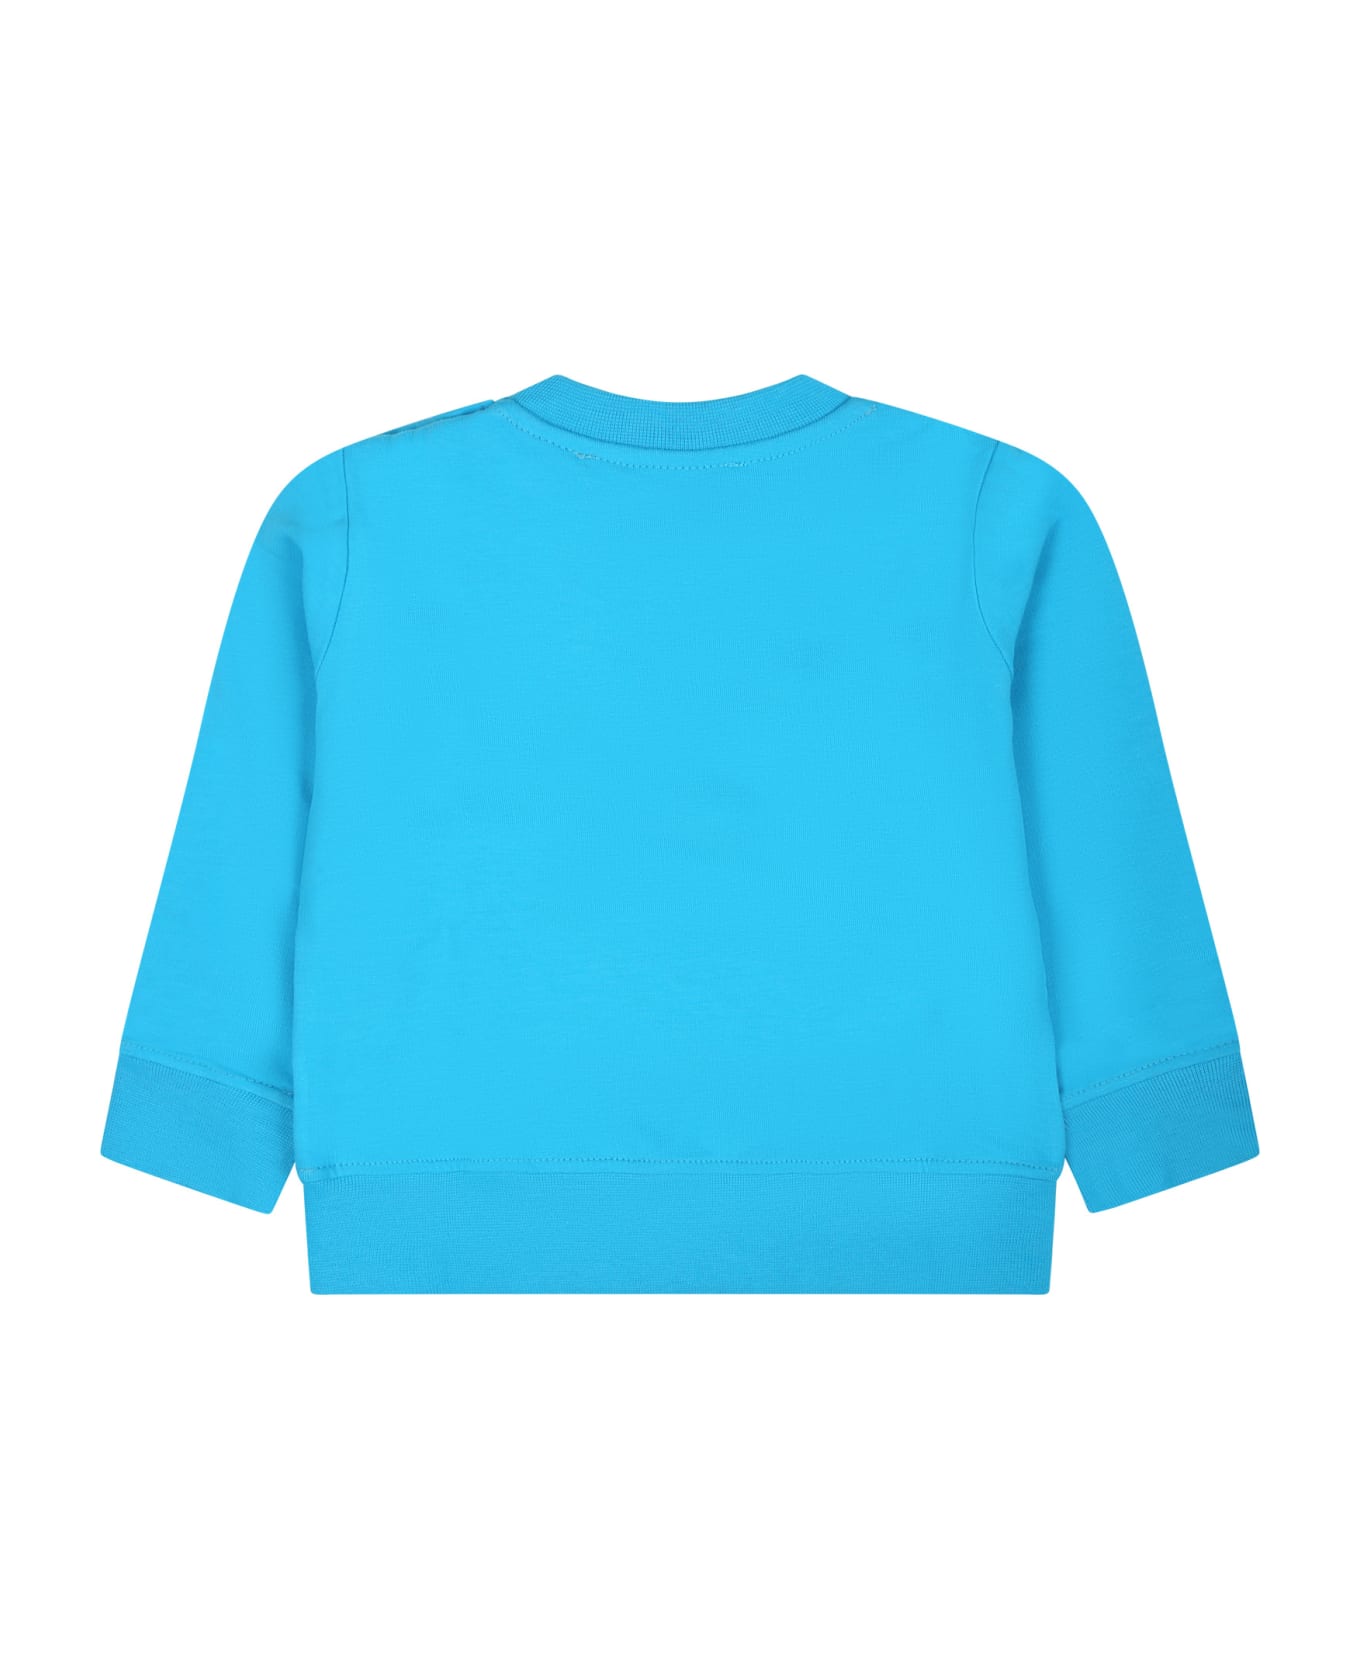 MSGM Light Blue Sweatshirt For Baby Boy With Logo - Light Blue